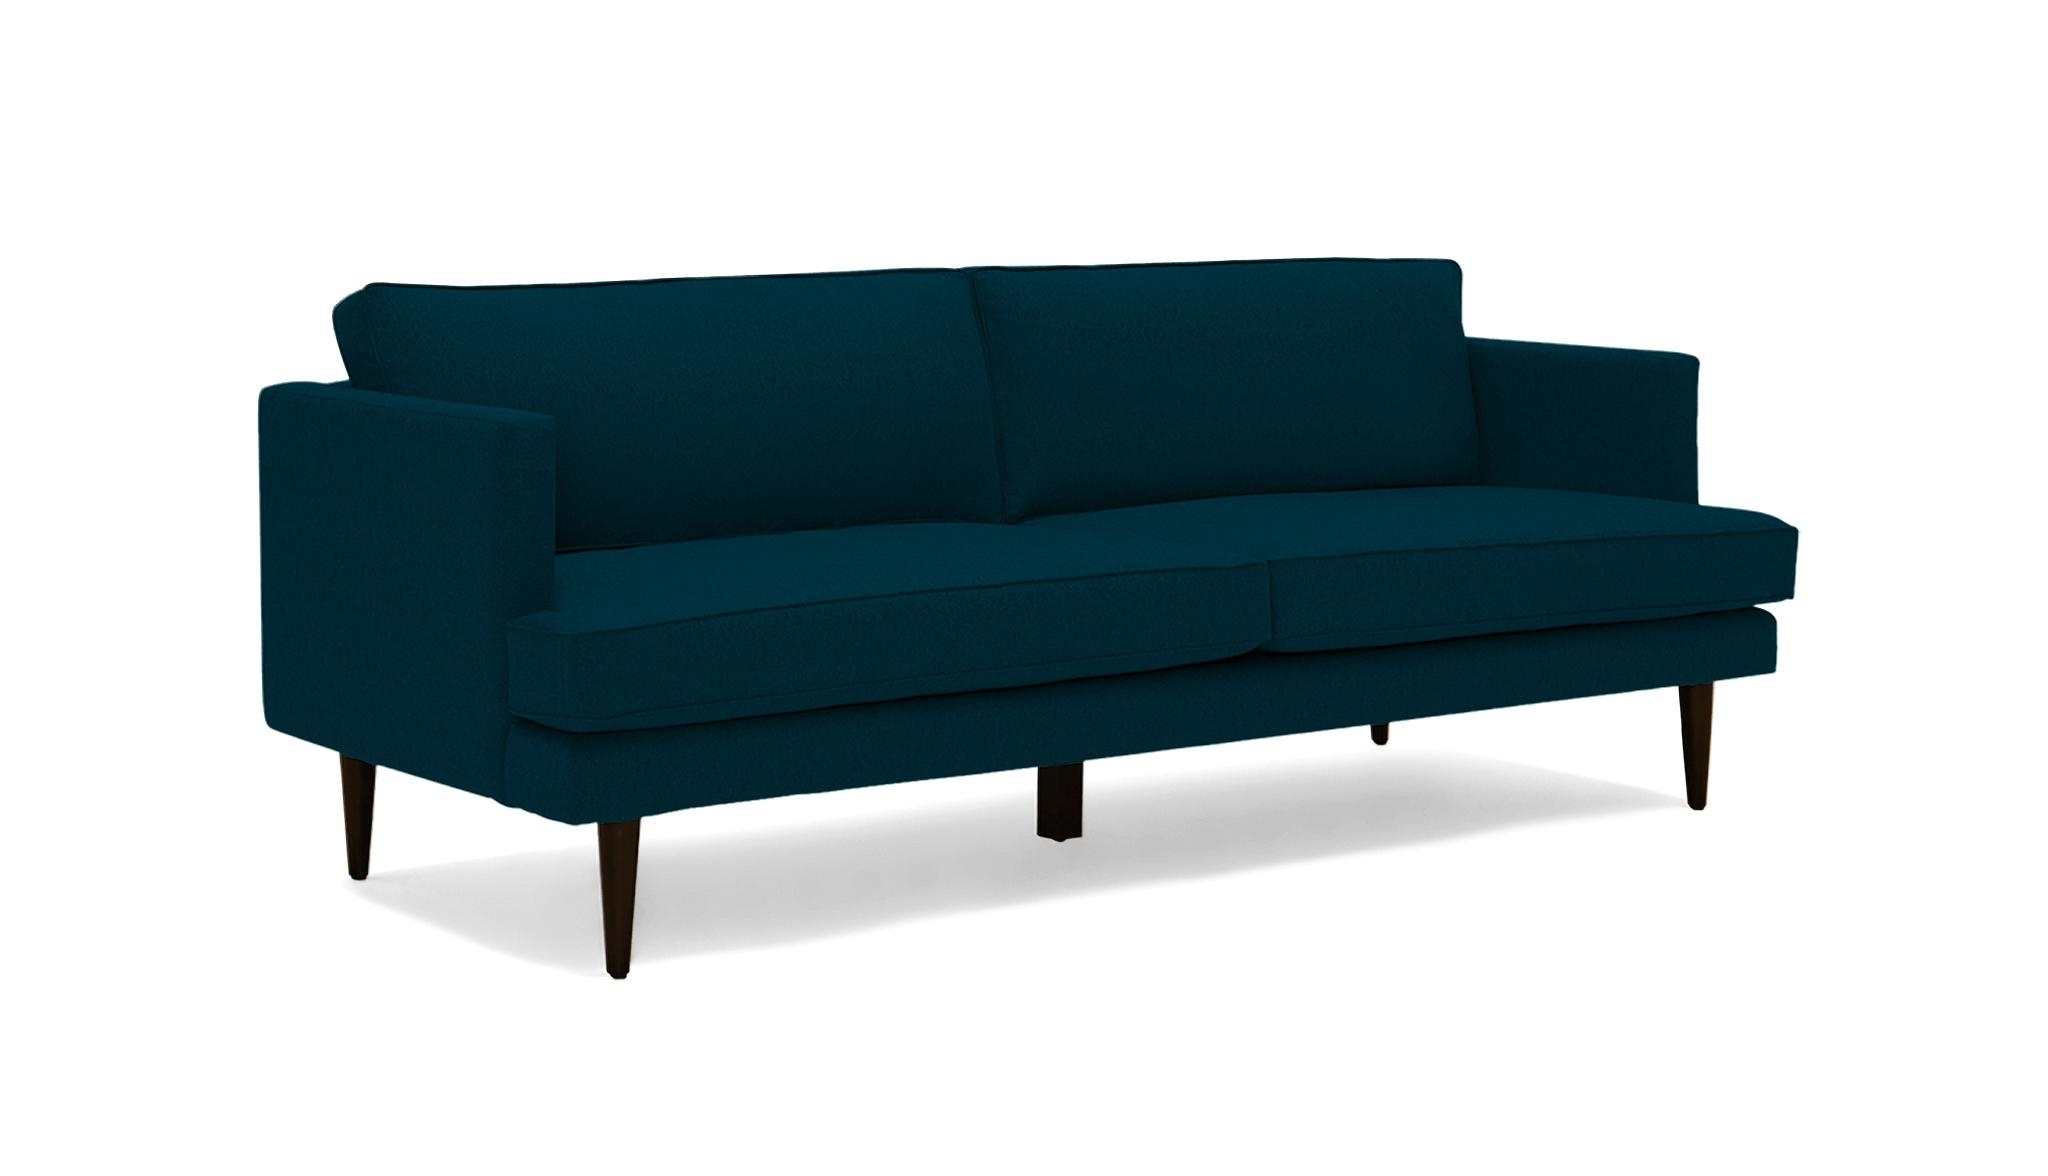 Blue Preston Mid Century Modern 86" Sofa - Key Largo Zenith Teal - Mocha - Image 1